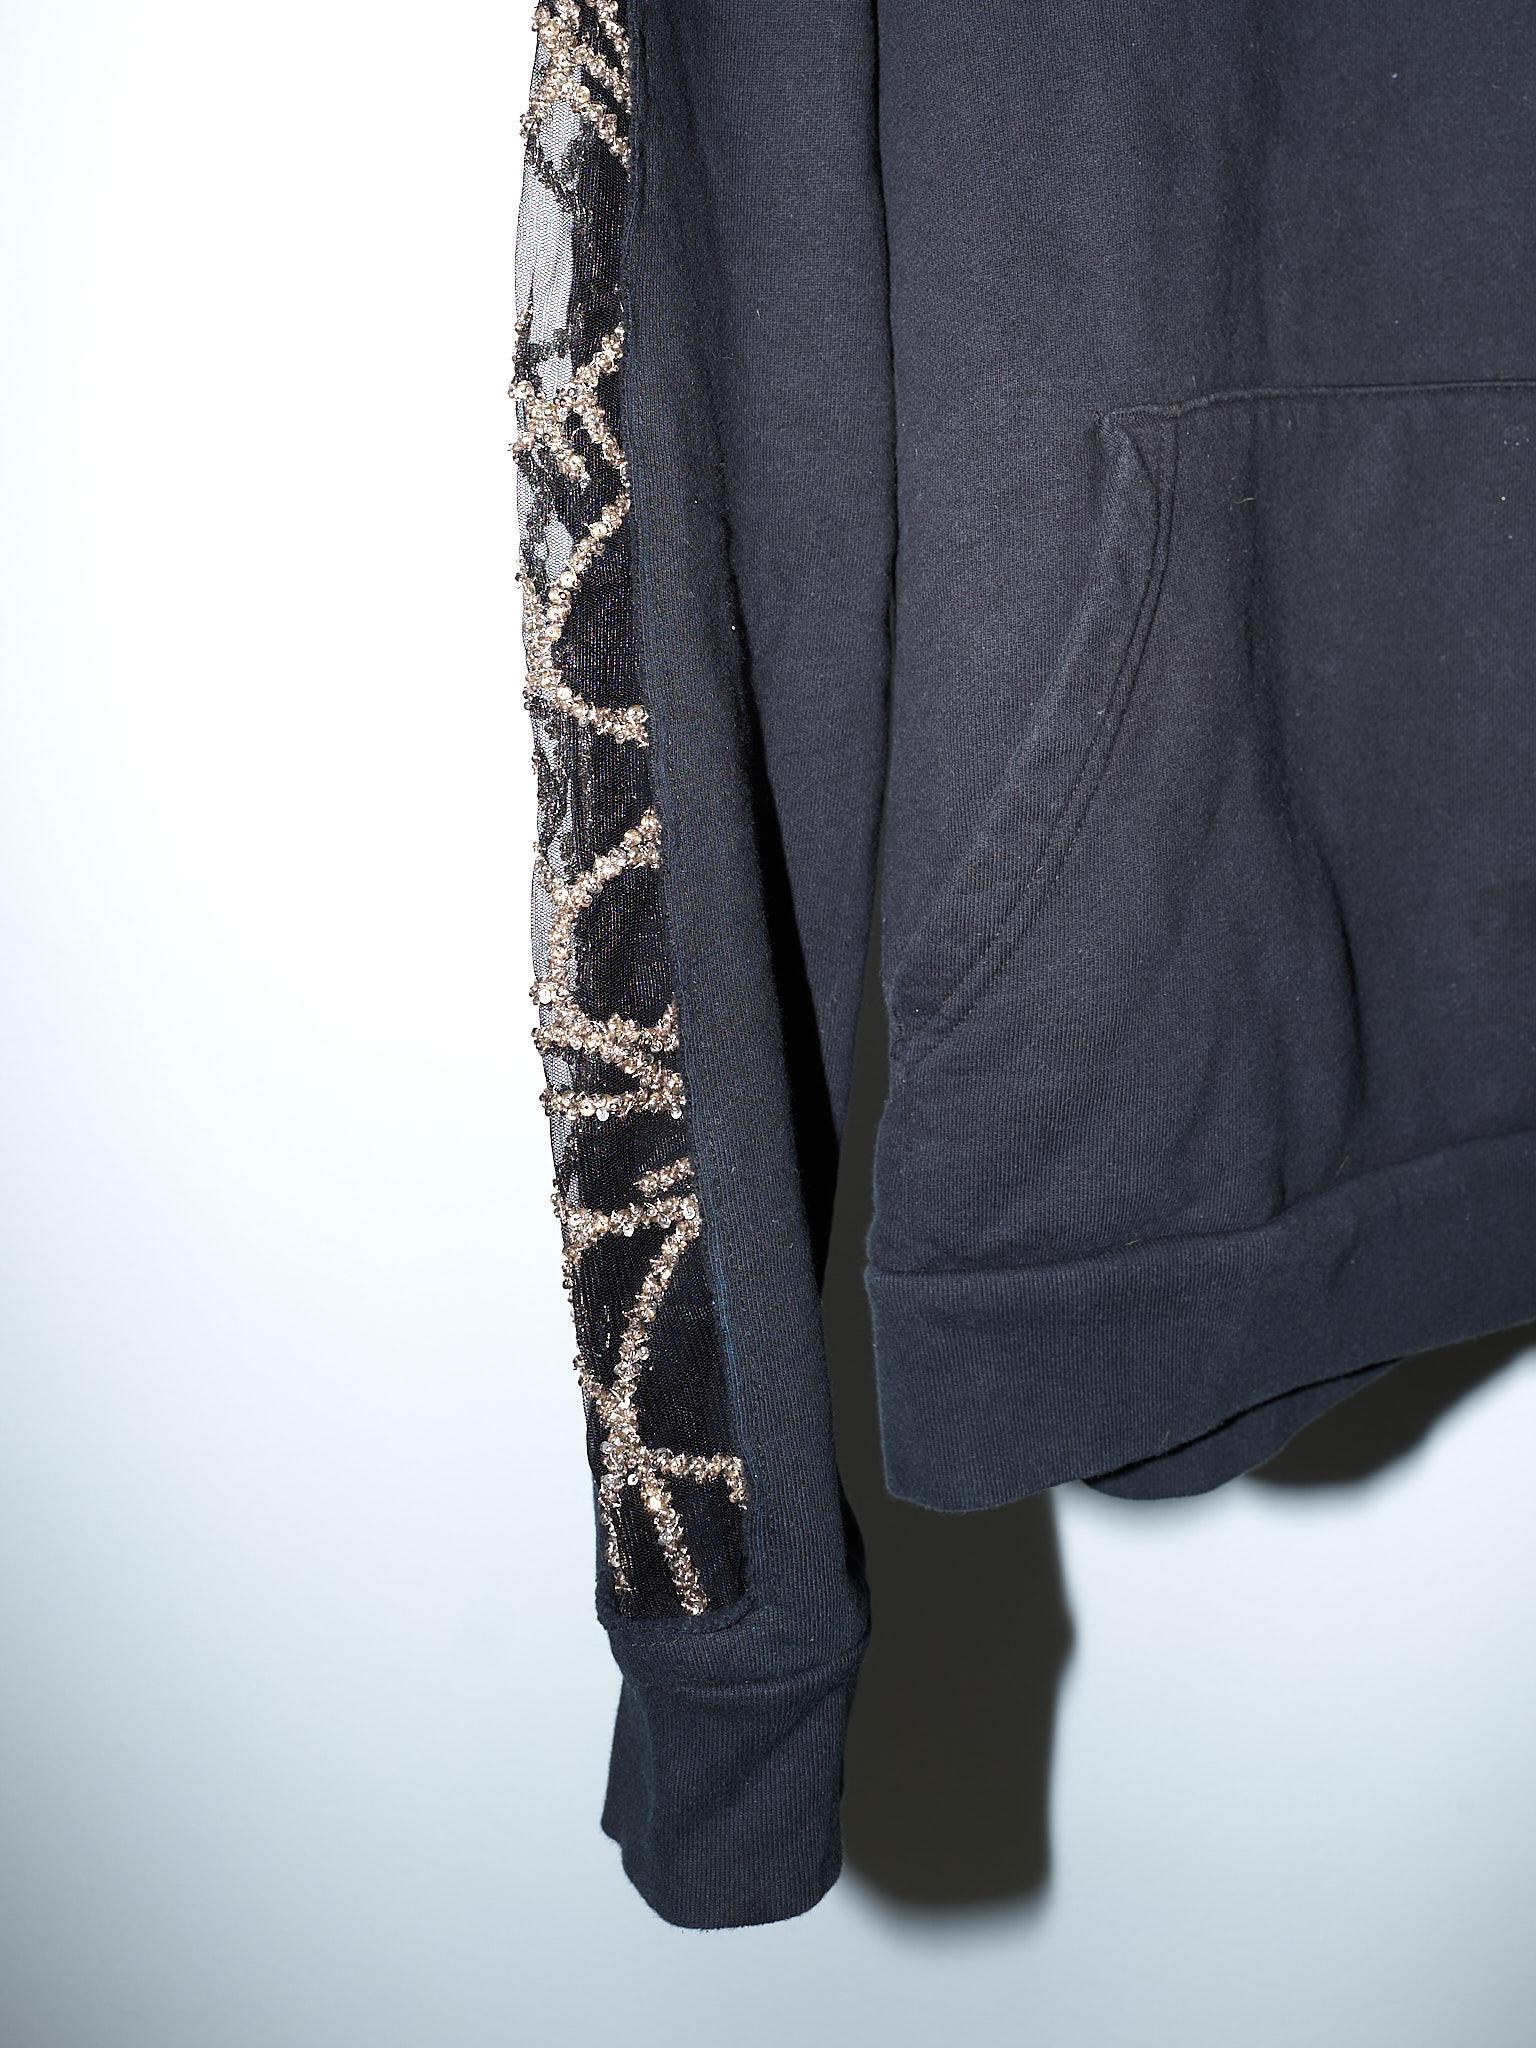 Black Hoodie Sweatshirt Transparent Sheer Mesh Chrystal Embroidery J Dauphin In New Condition For Sale In Los Angeles, CA